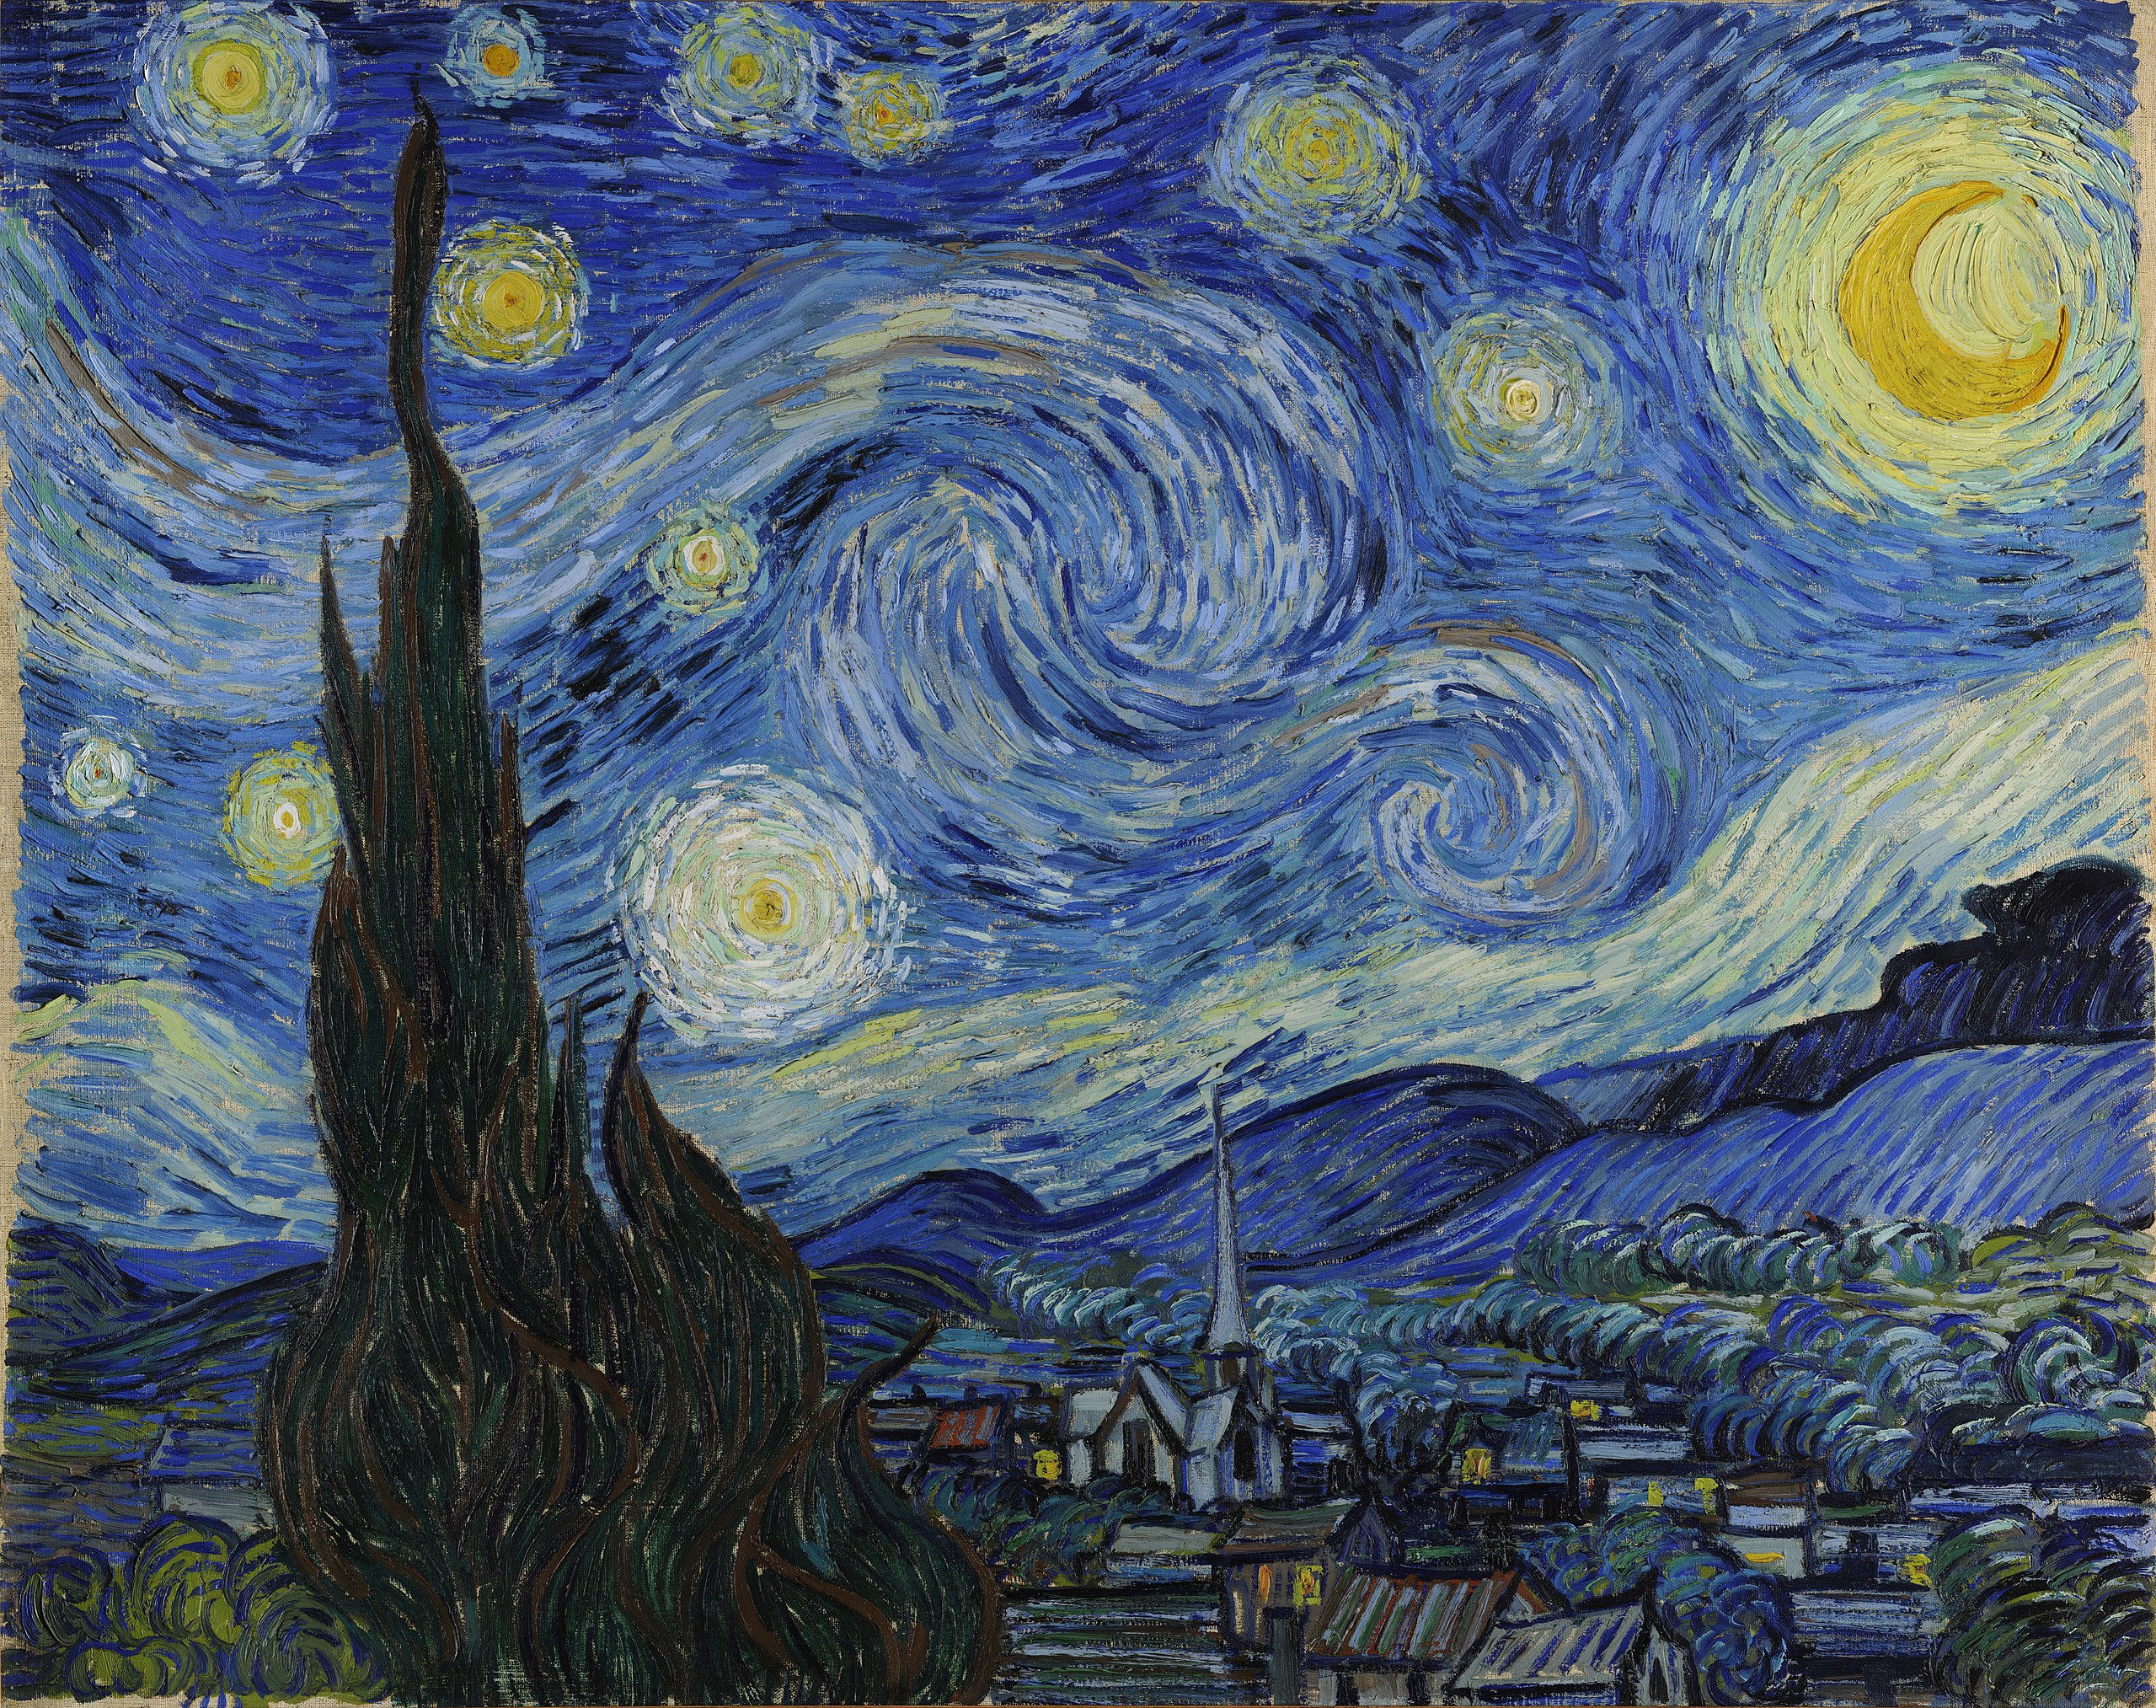 Gwiaździsta noc by Vincent van Gogh - 1889 - 73,7 × 92,1 cm 